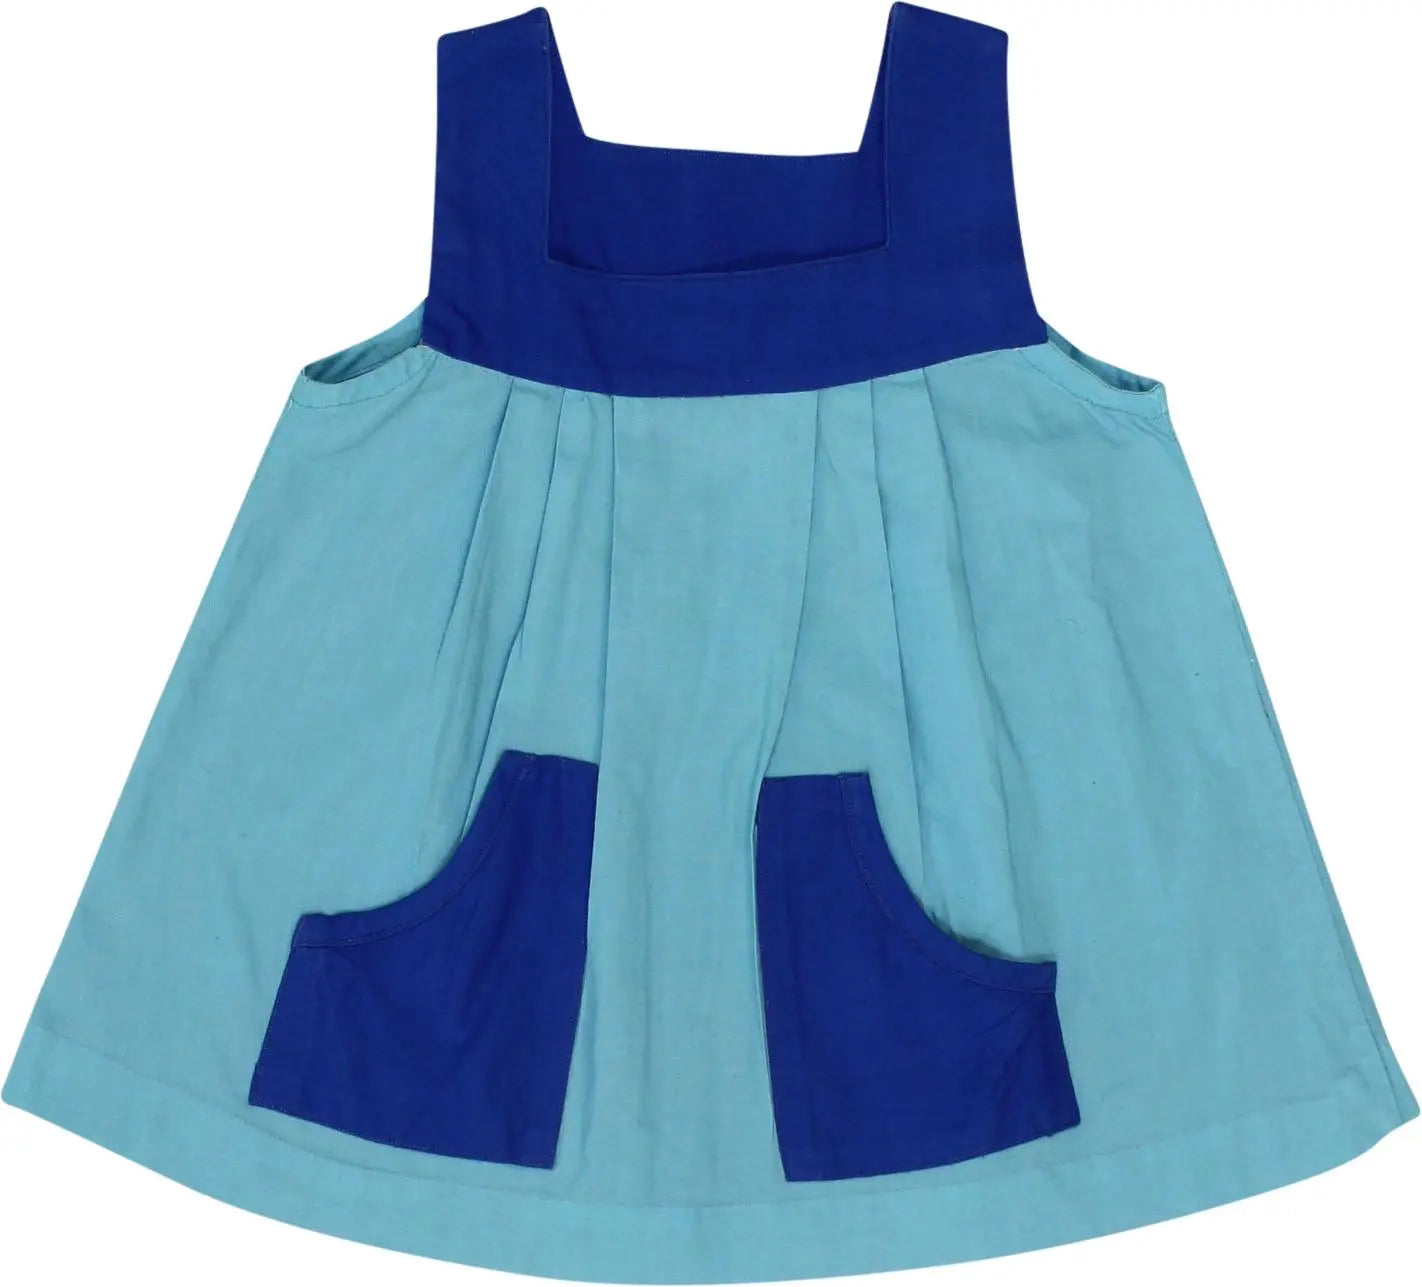 Handmade - Blue Handmade Dress- ThriftTale.com - Vintage and second handclothing